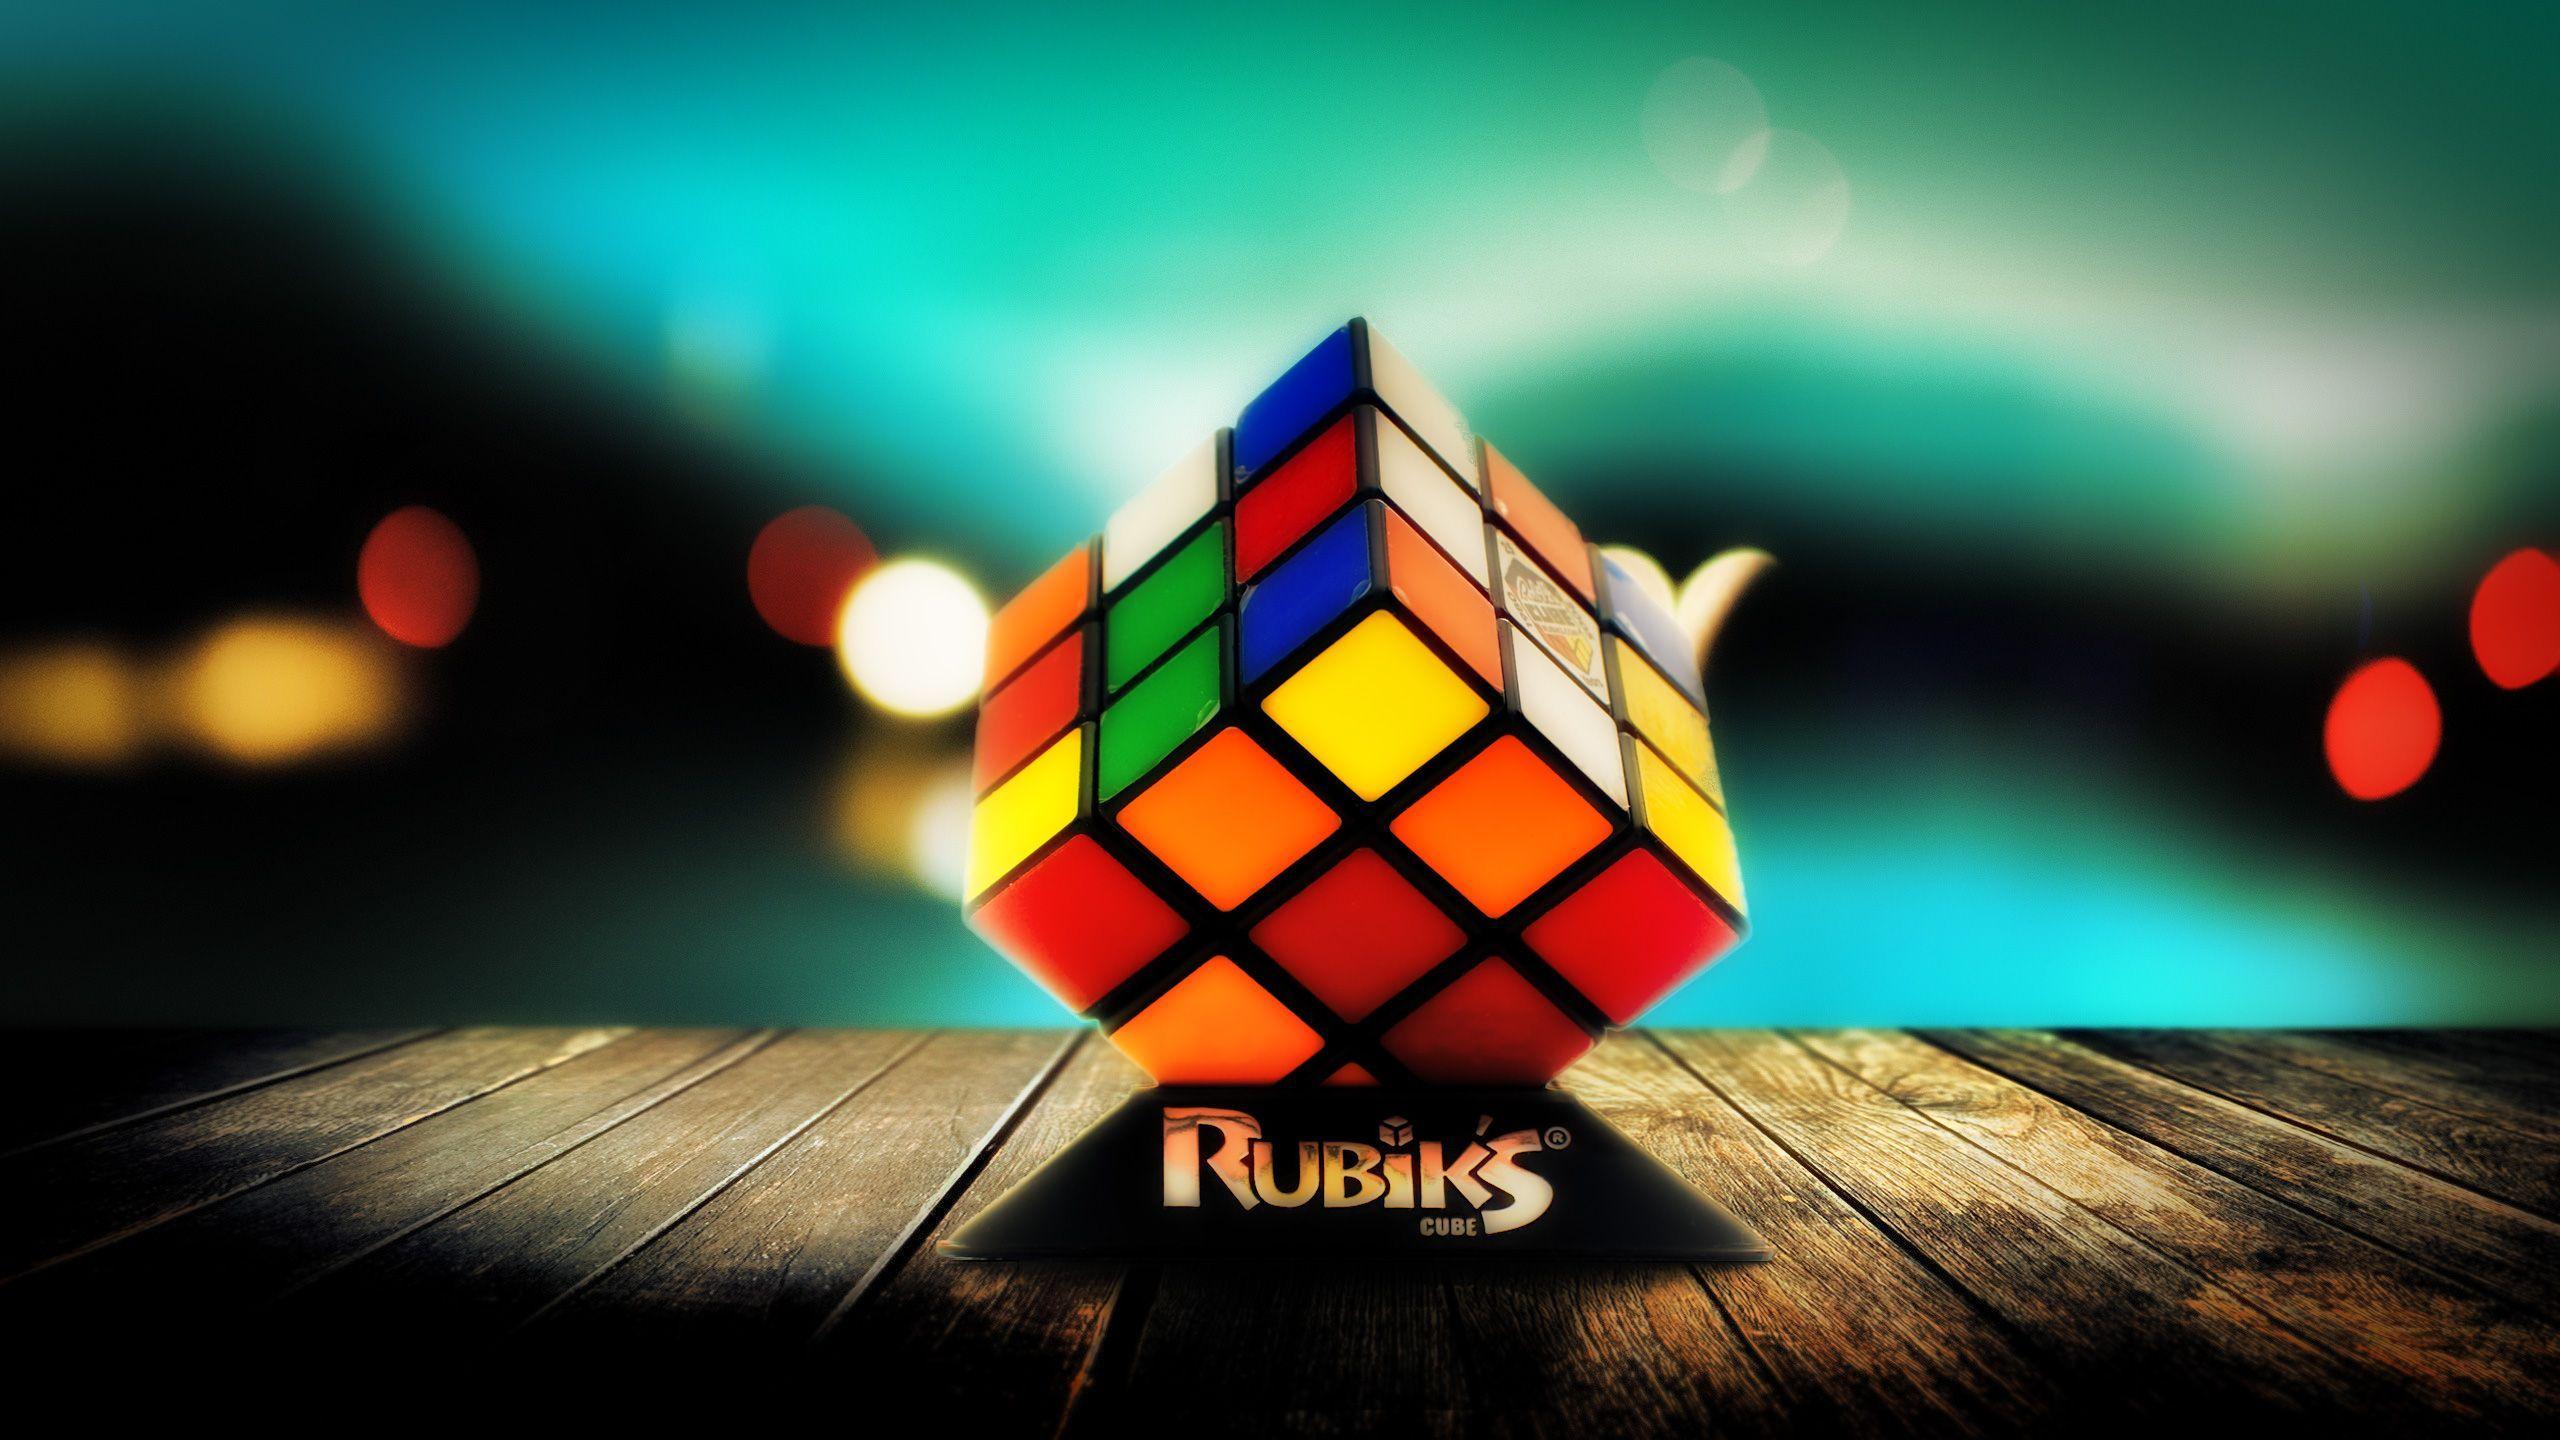 Rubiks Cube Wallpaper 2560x1440. Rubik's